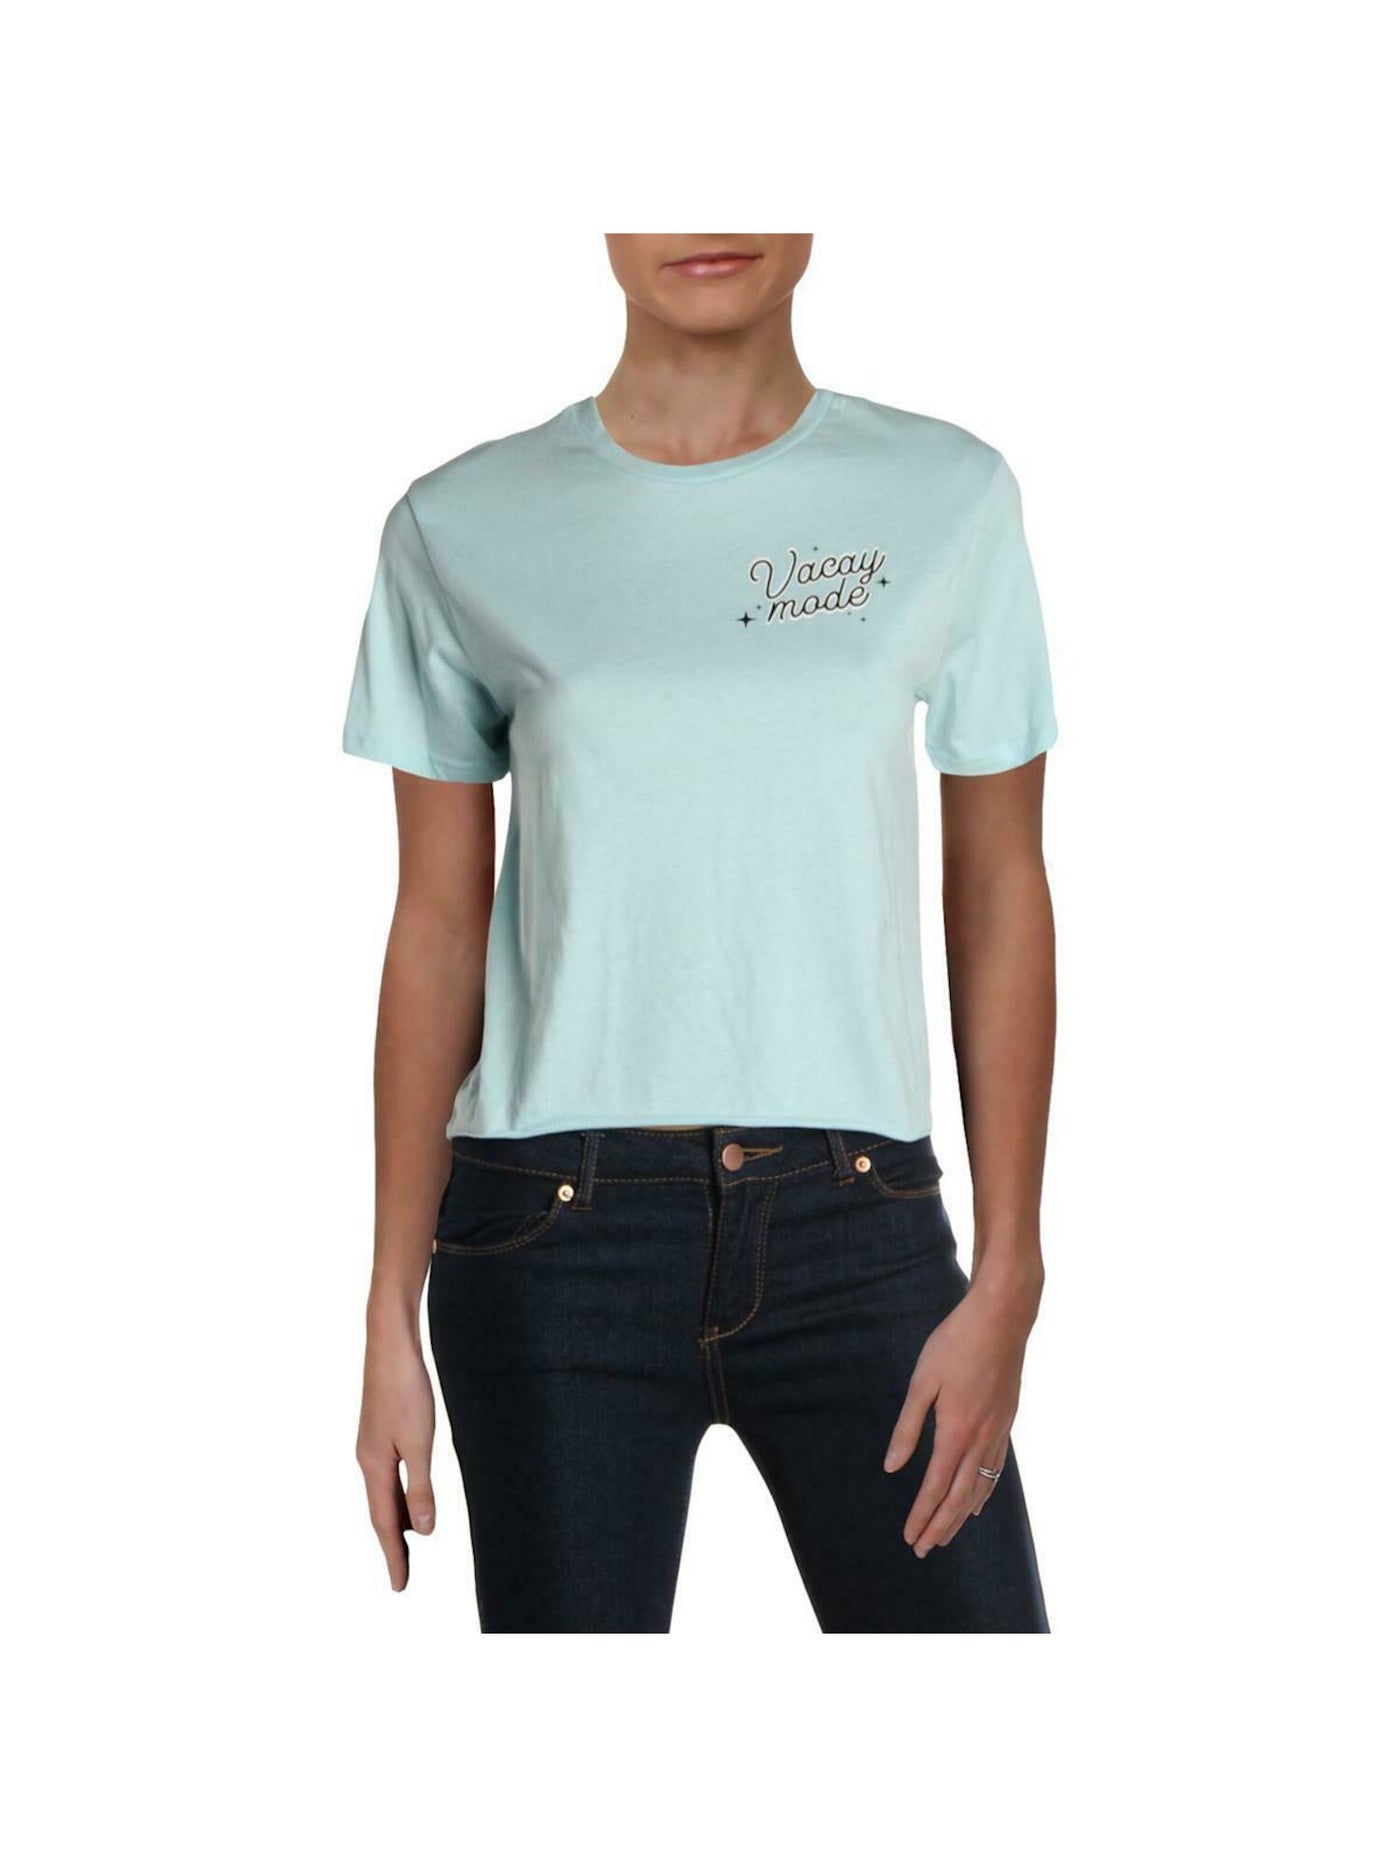 REBELLIOUS ONE Womens Light Blue Printed Short Sleeve Crew Neck T-Shirt XS